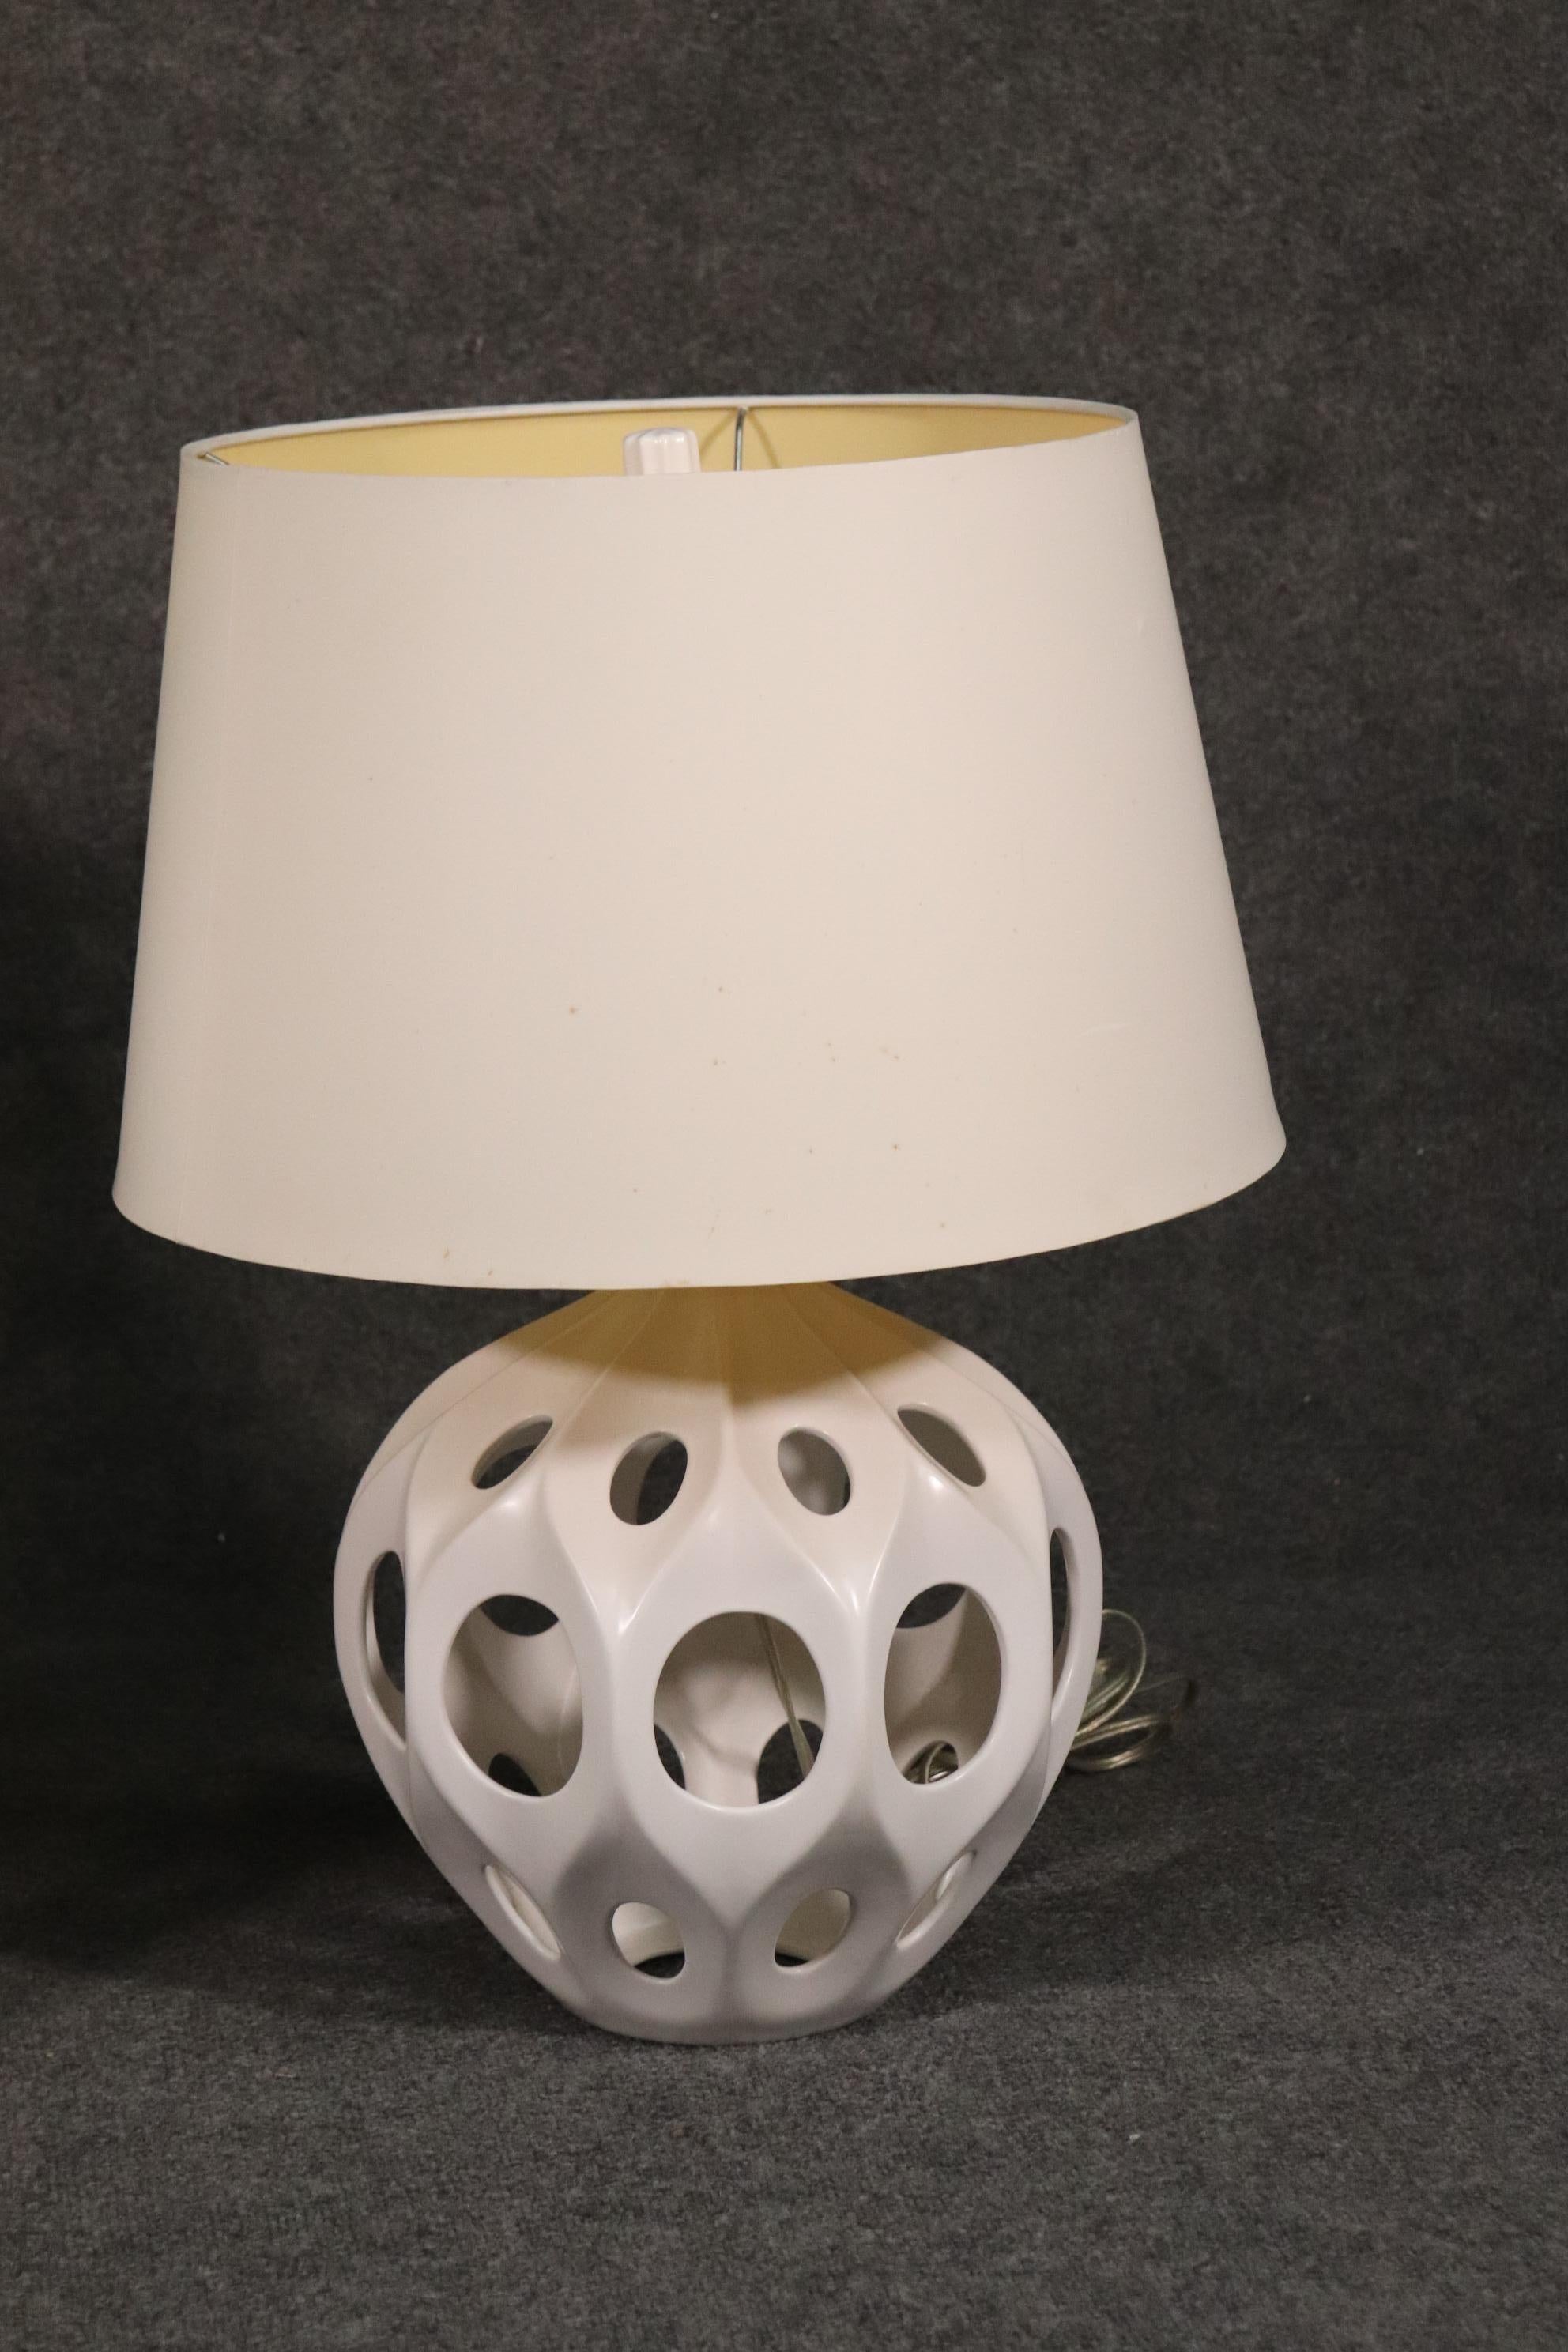 Italian Pair of Decorative Ceramic Mid-Century Modern Geometric Table Lamps